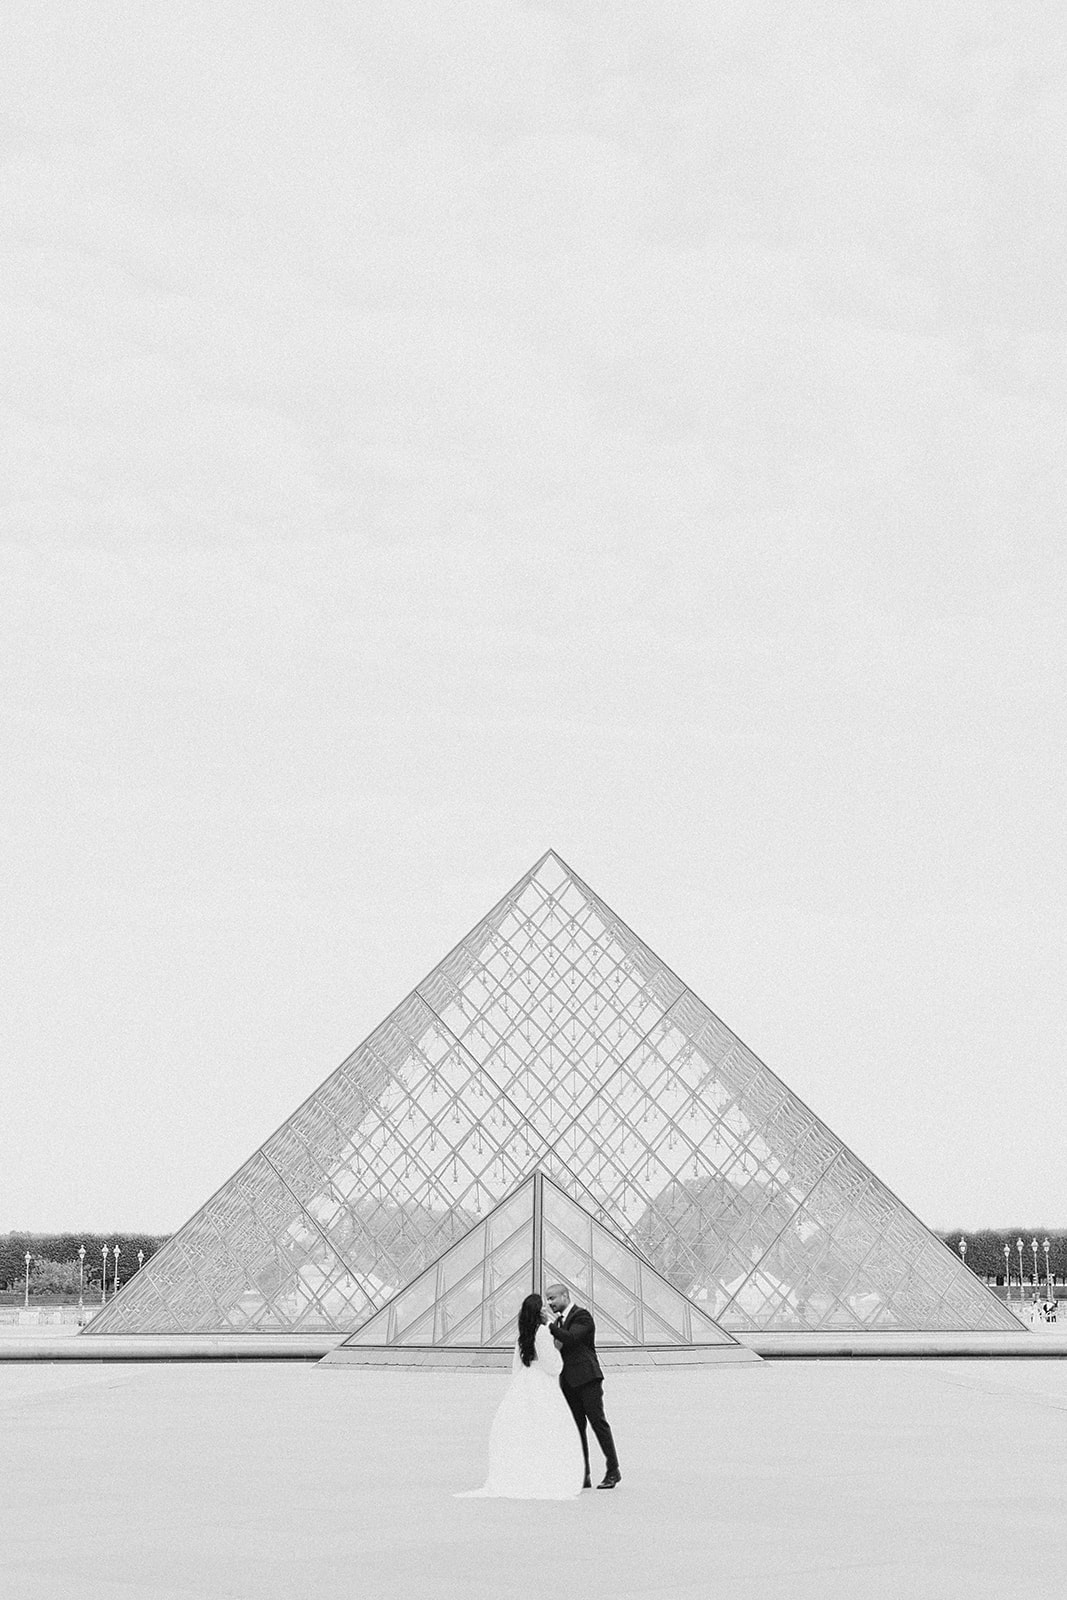 The Louvre Paris Engagement photos | Chernogorov Photography Destination Wedding Photographers